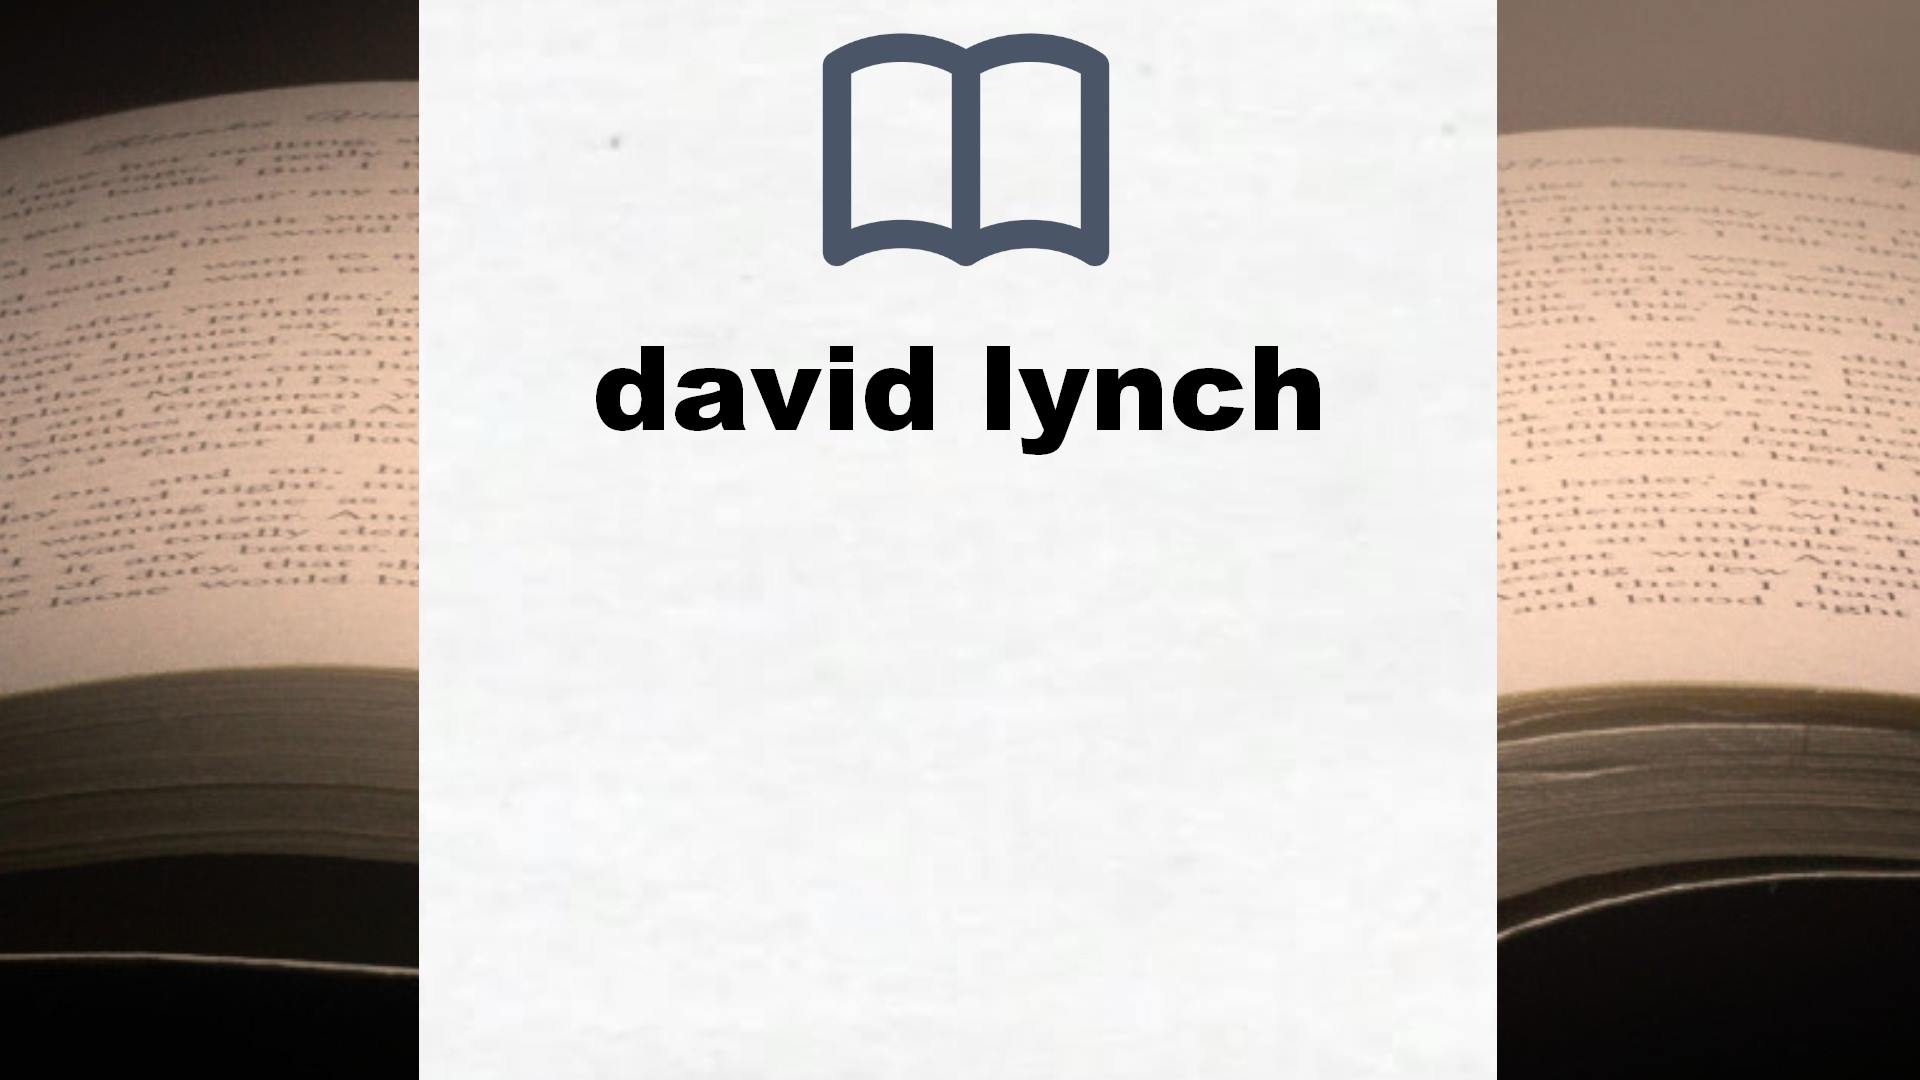 Libros sobre david lynch